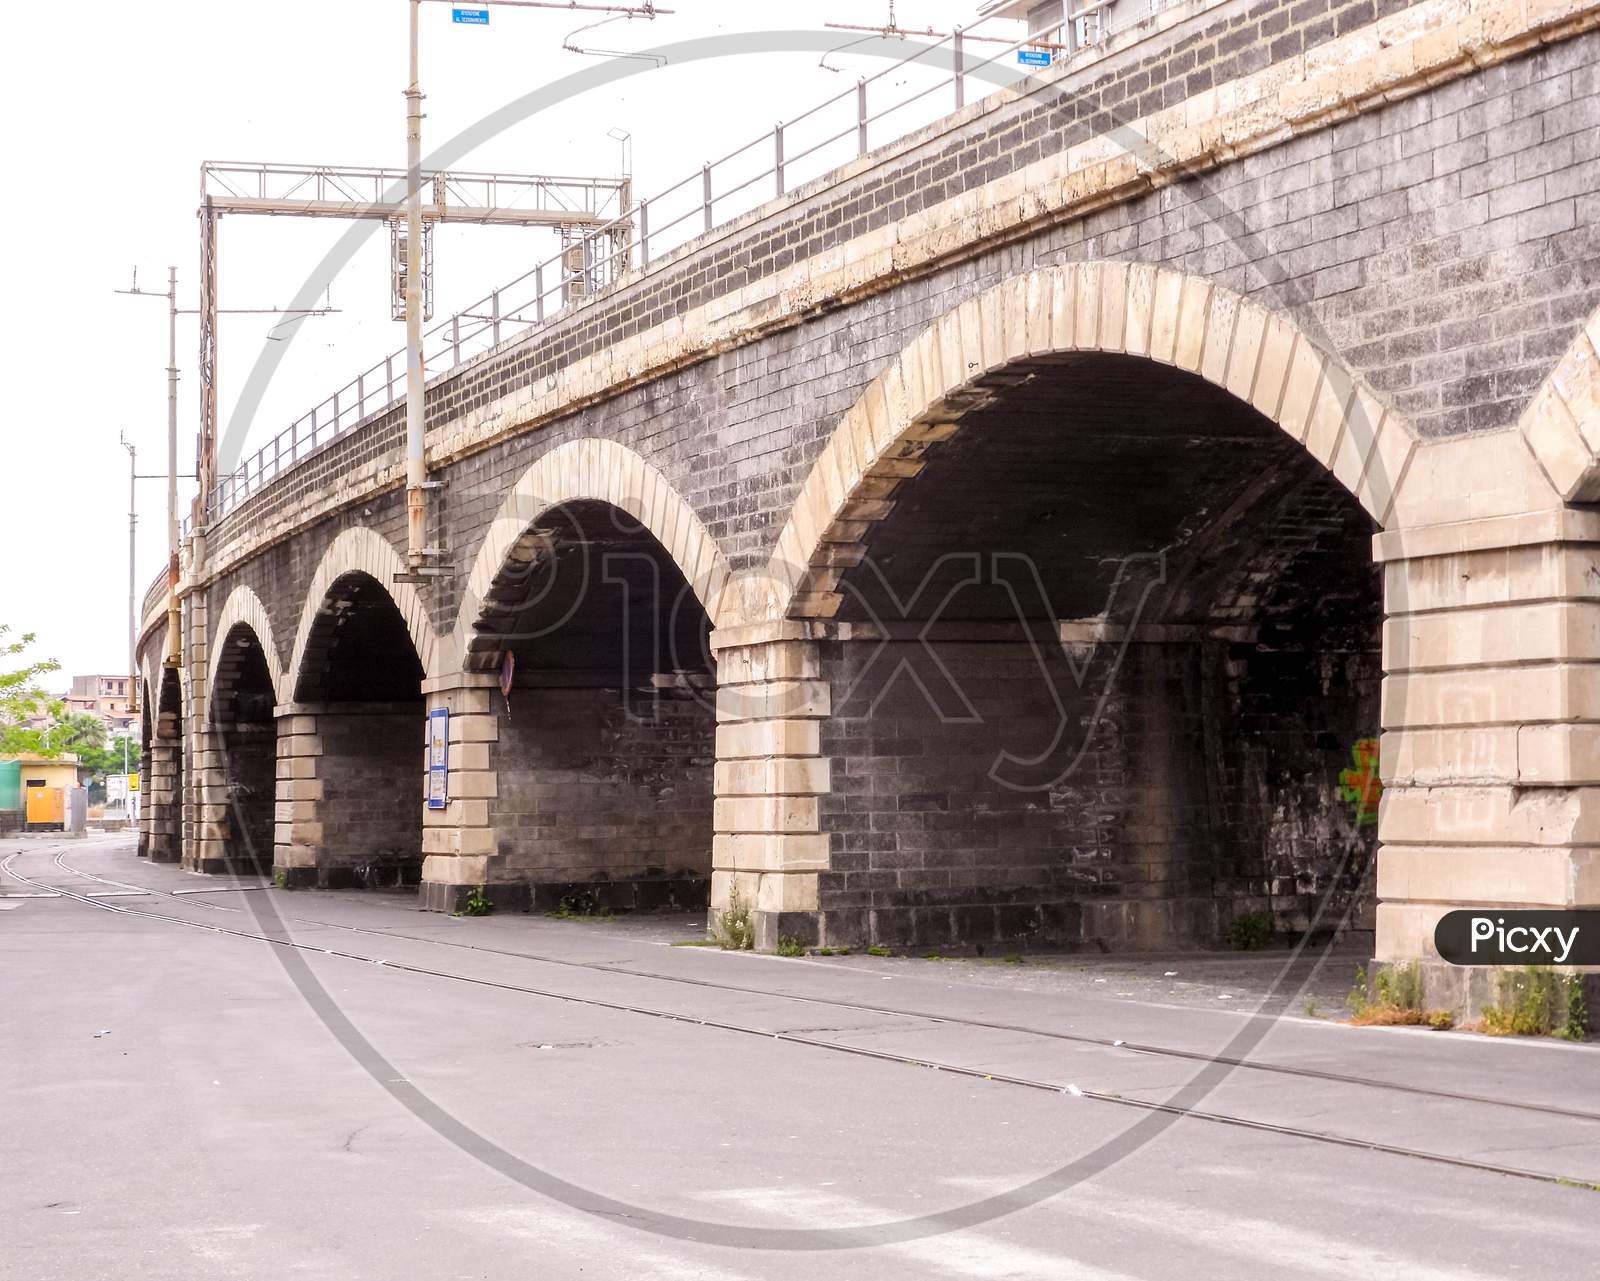 Italian Railways Bridge Arches